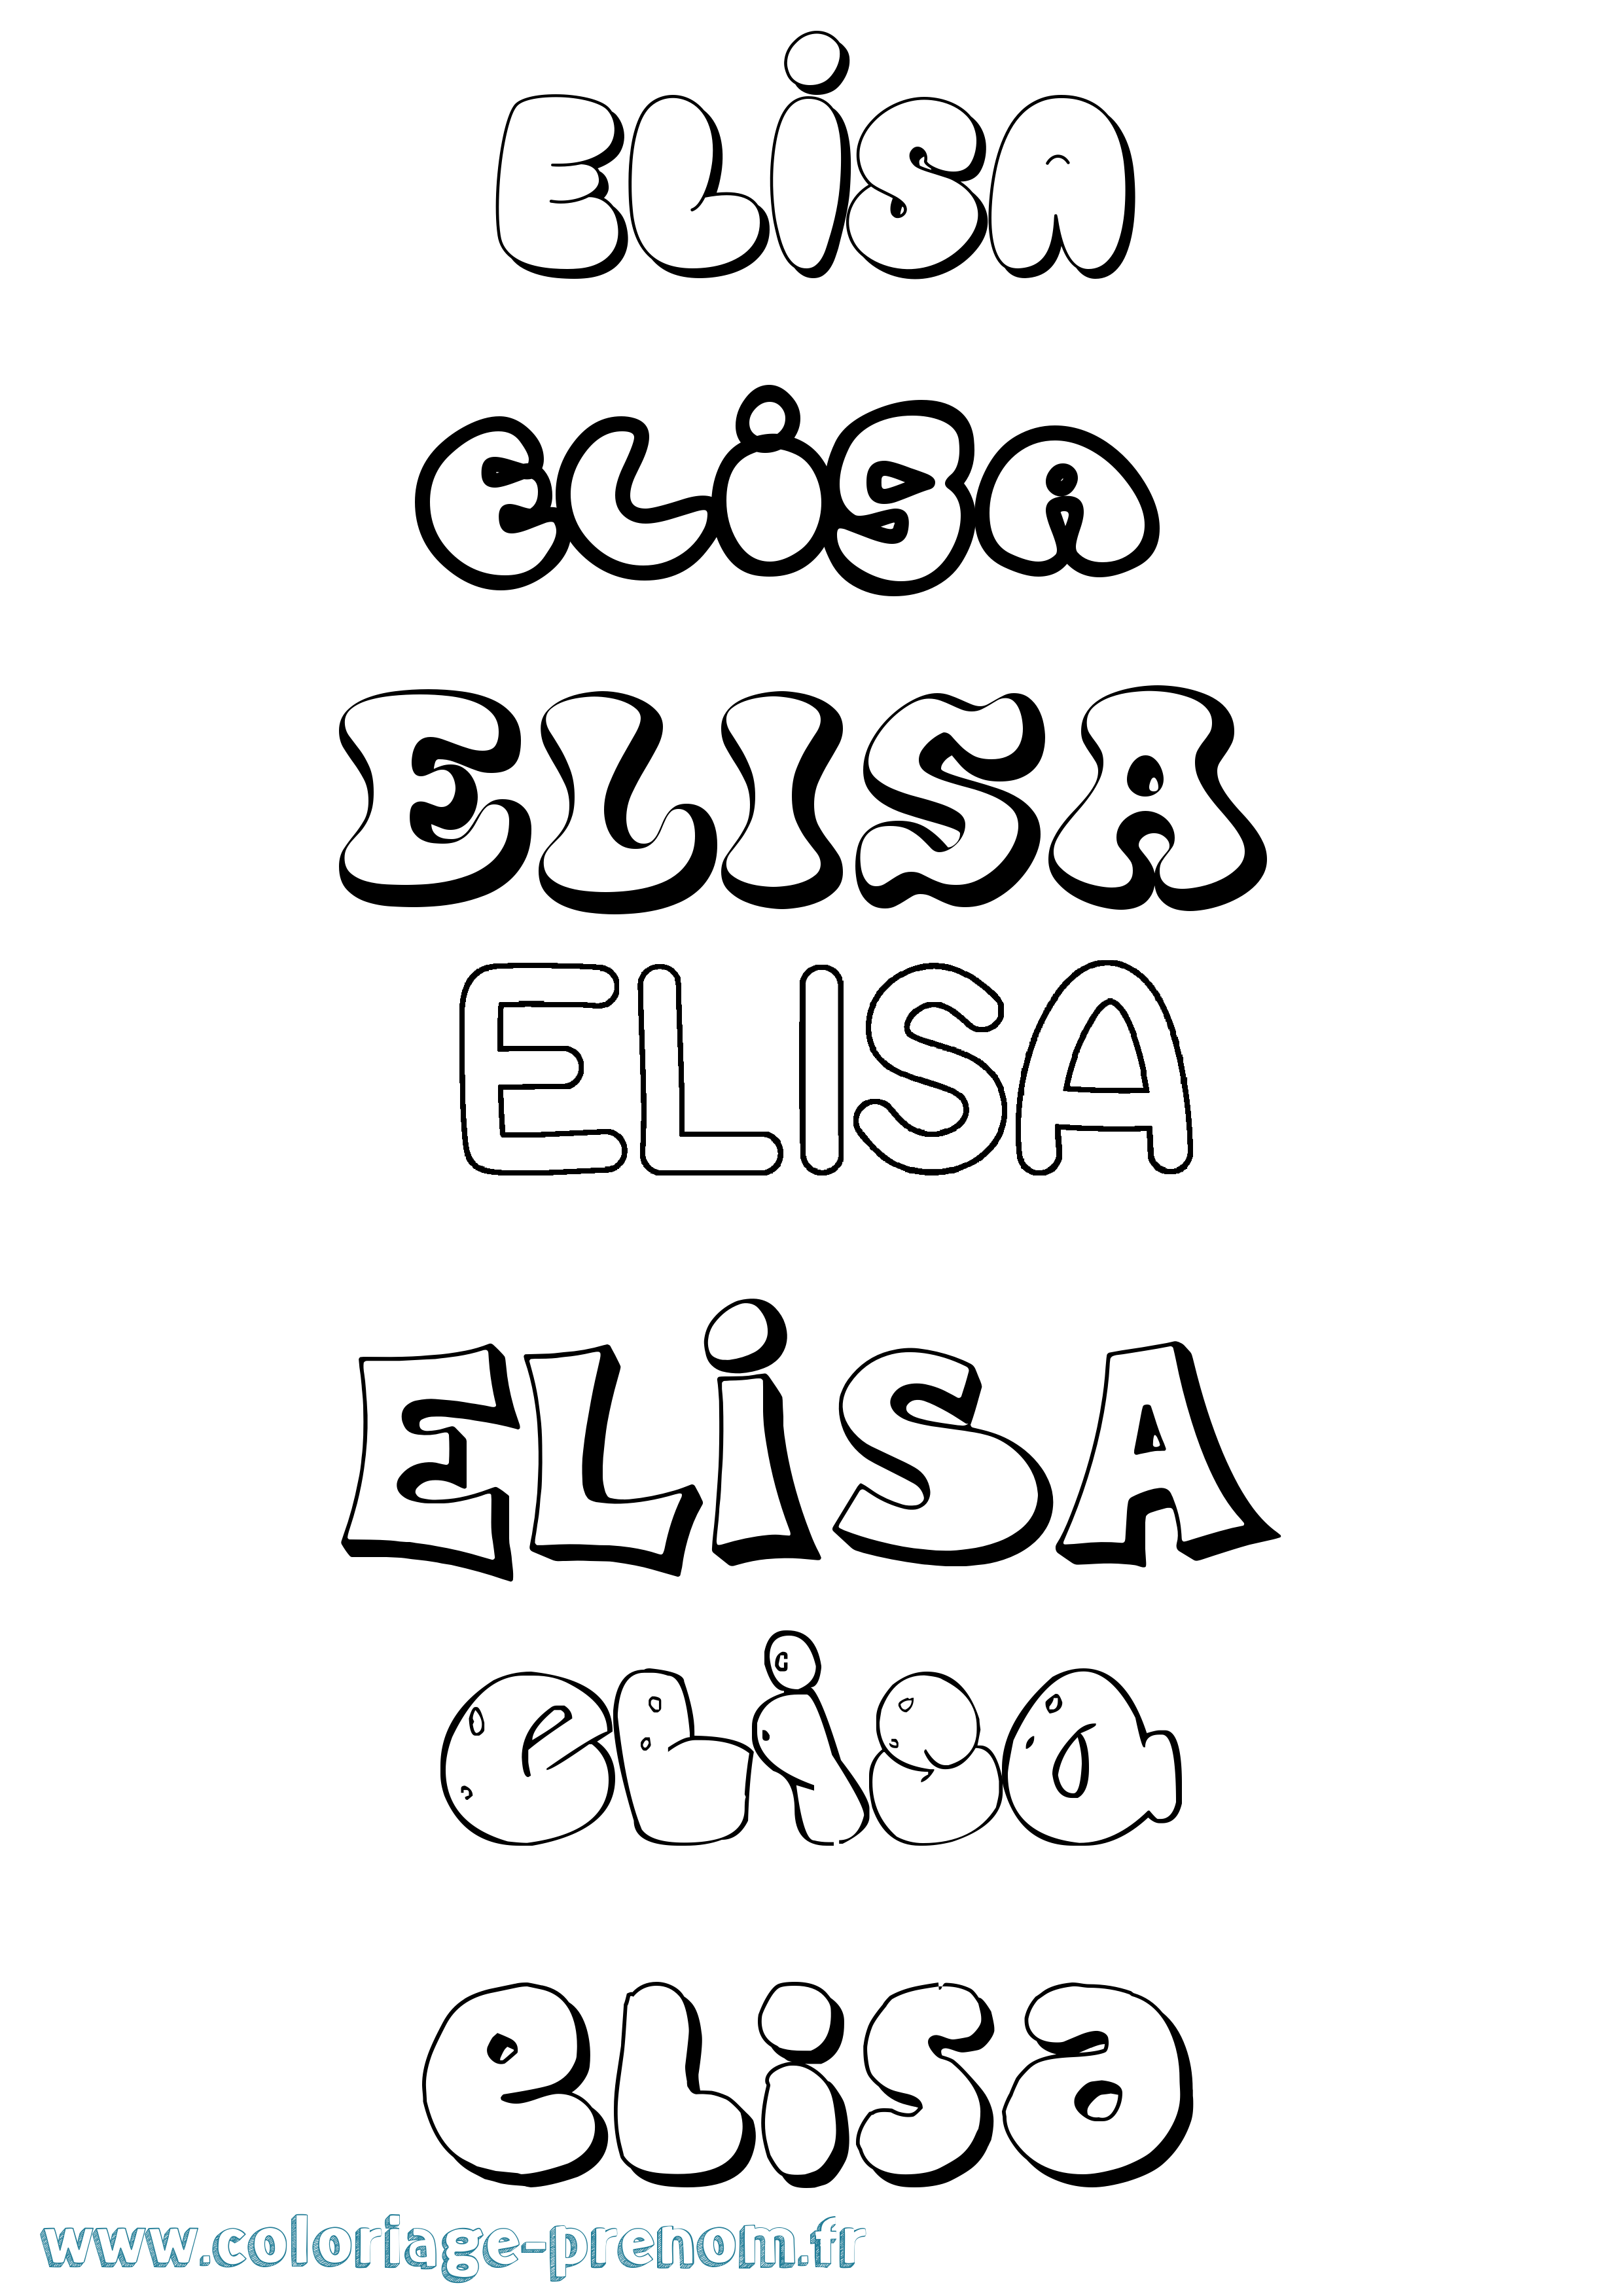 Coloriage prénom Elisa